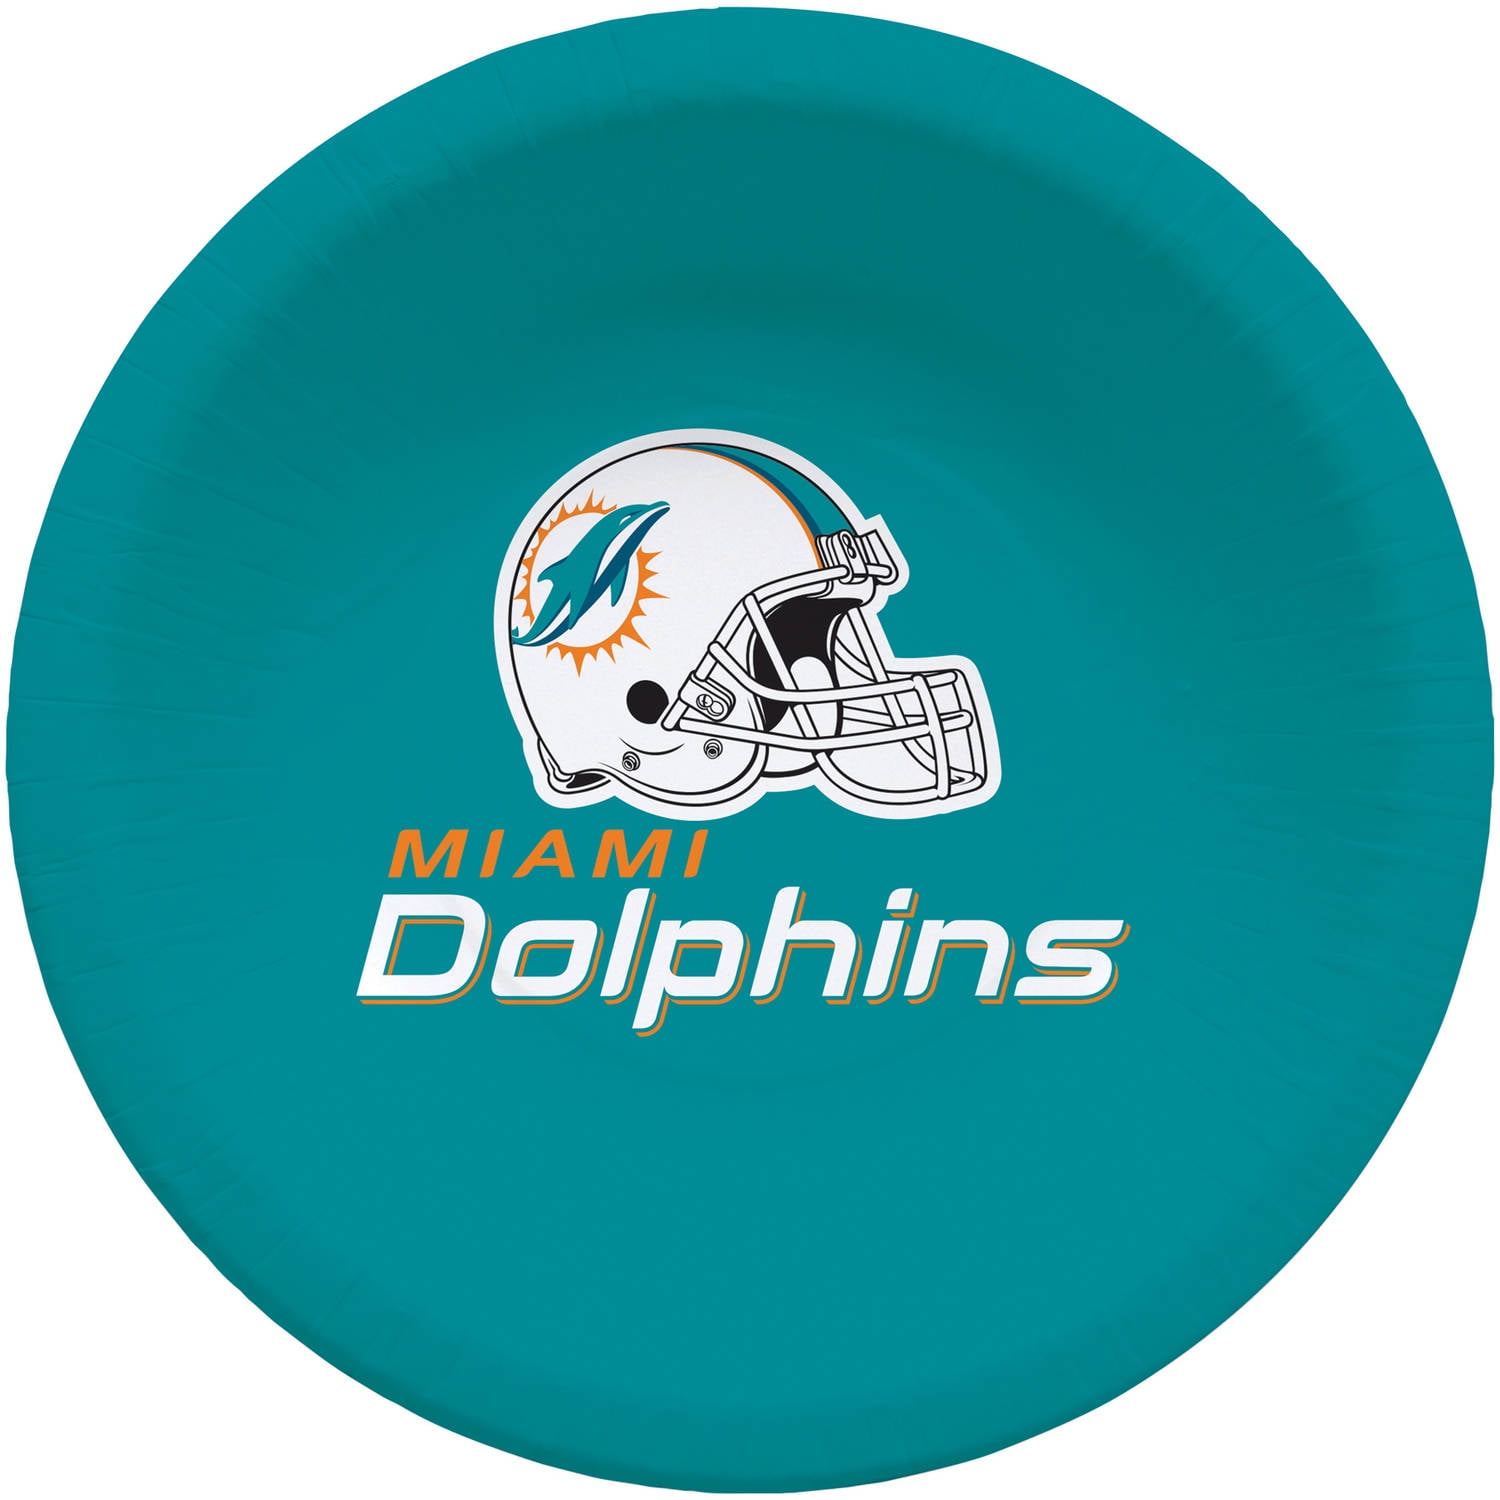 Miami Dolphins Bowls, 8-Pack - Walmart.com